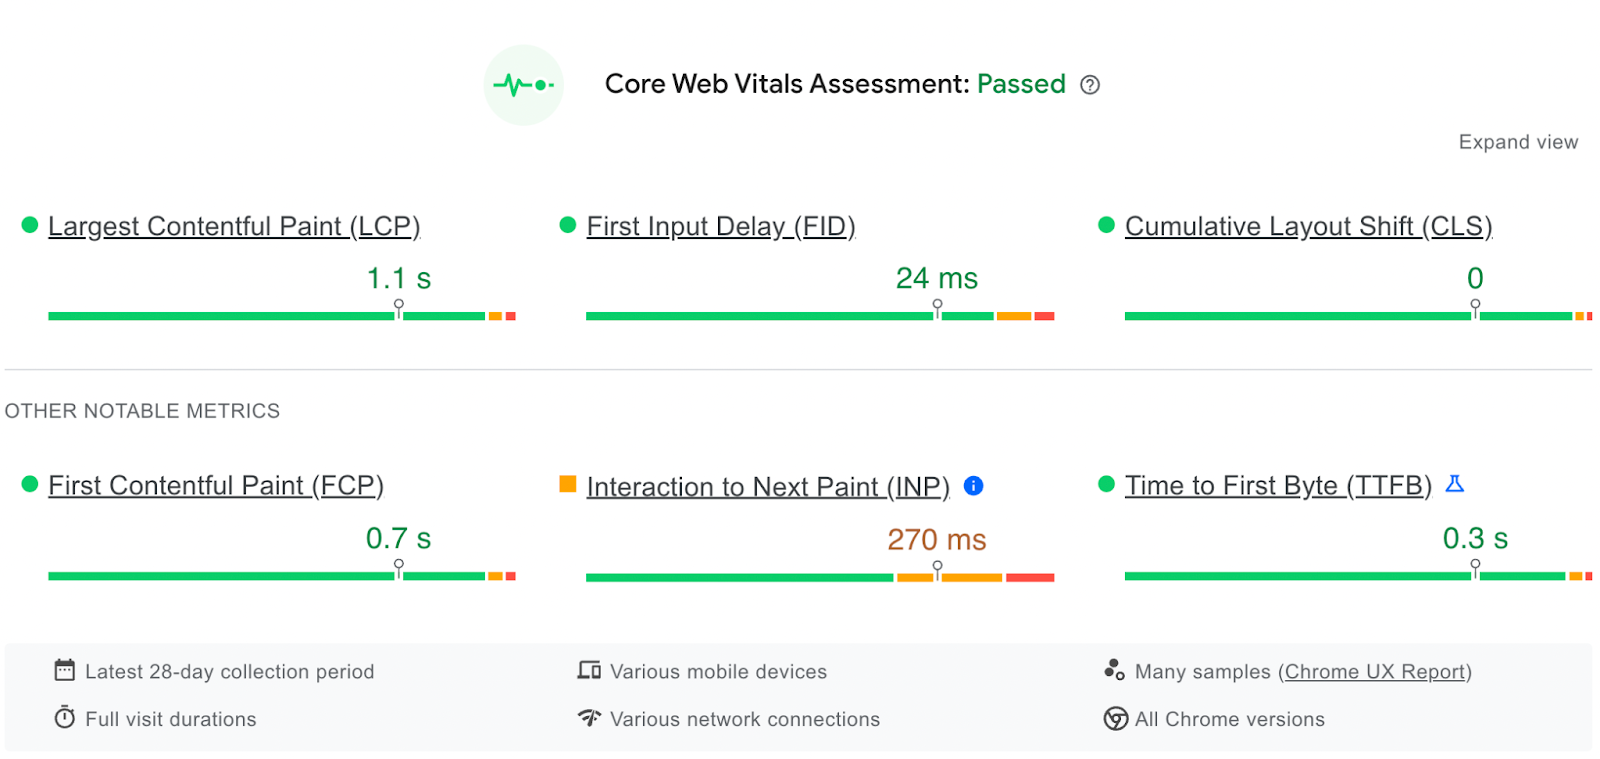 Core Web Vitals Assessment in the Search Console